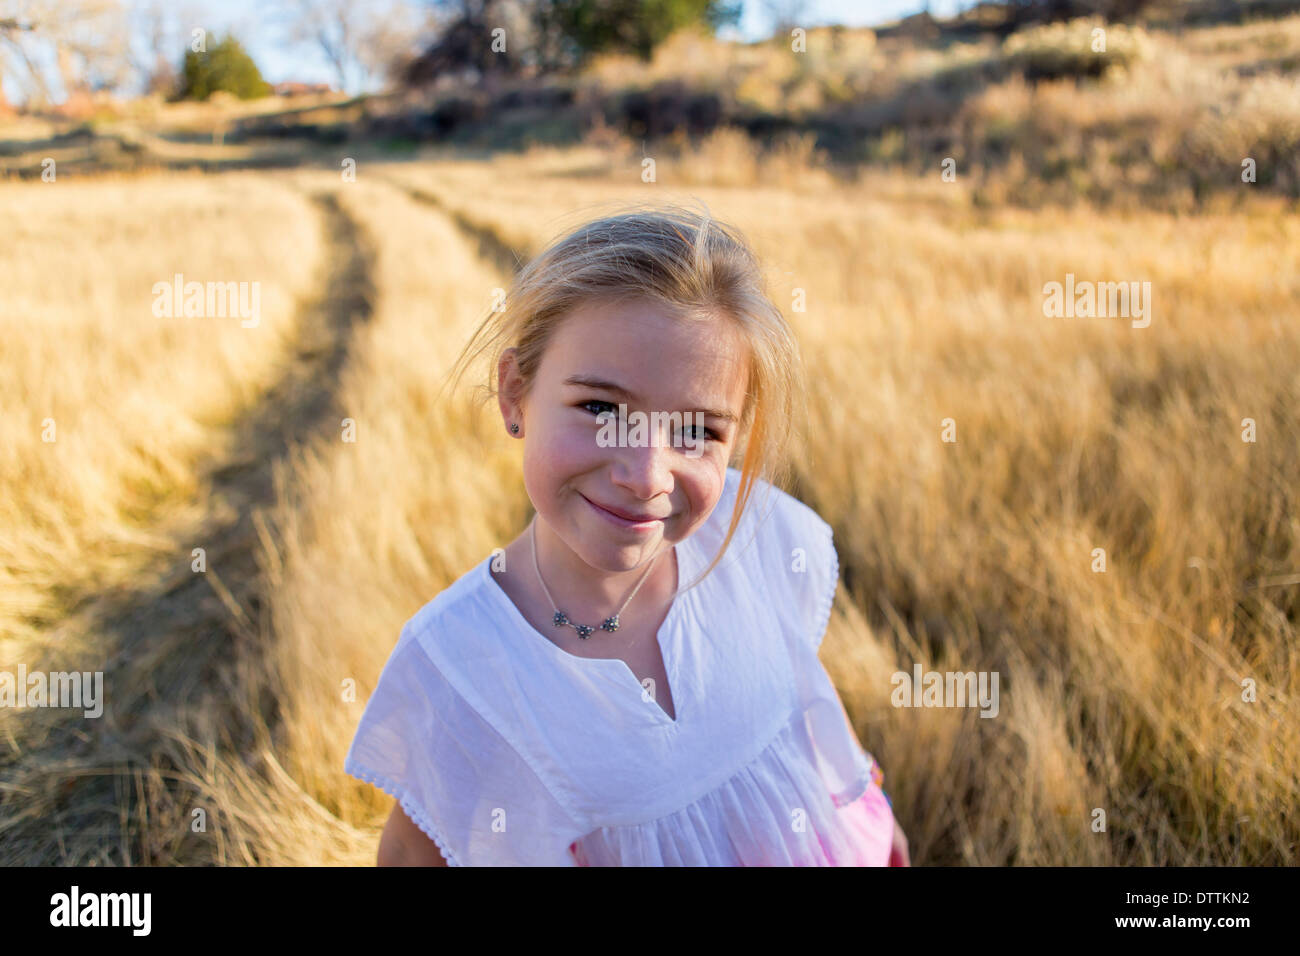 Caucasian girl smiling outdoors Stock Photo